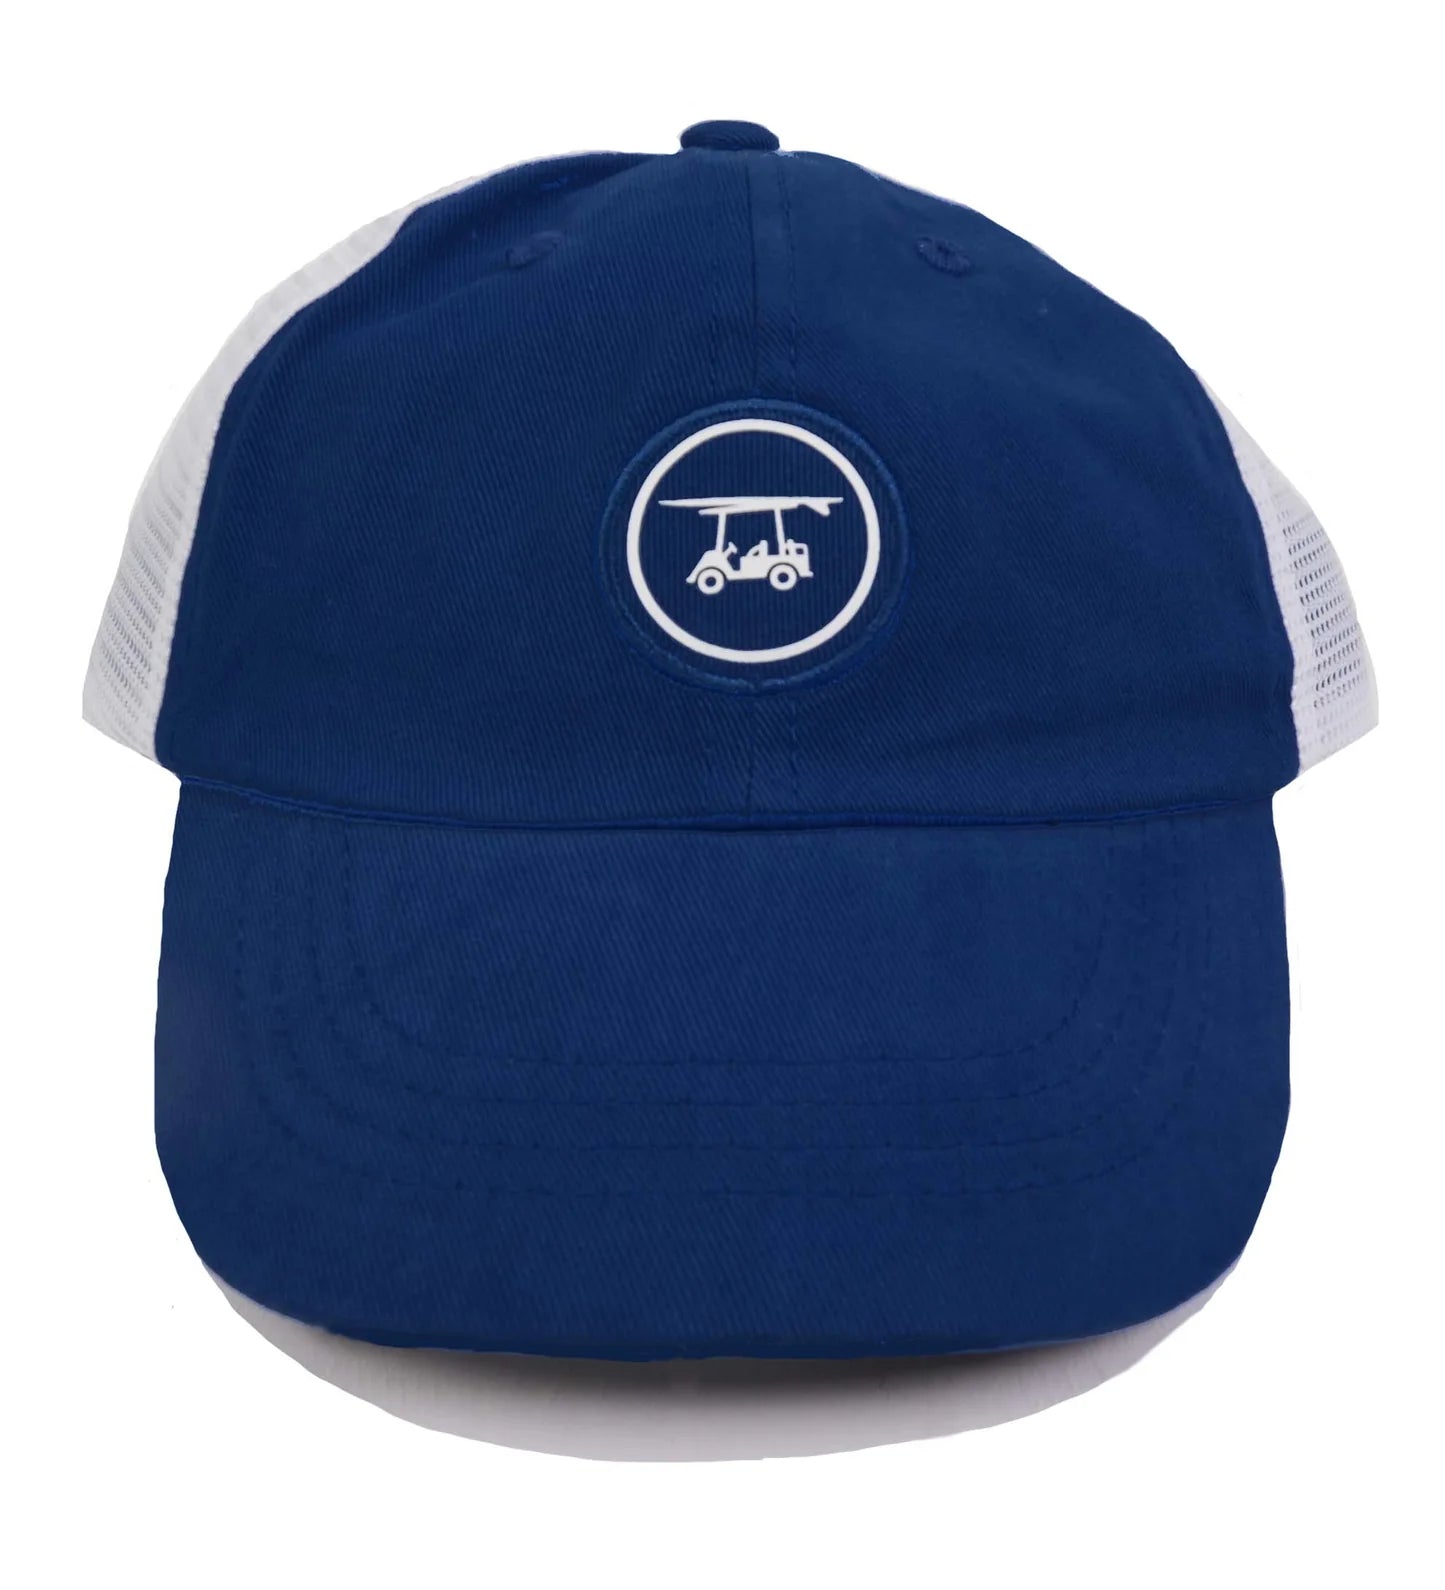 Youth Trucker Hat w/ circle logo-Navy-YCTRUCKER-N-Baldhead blues